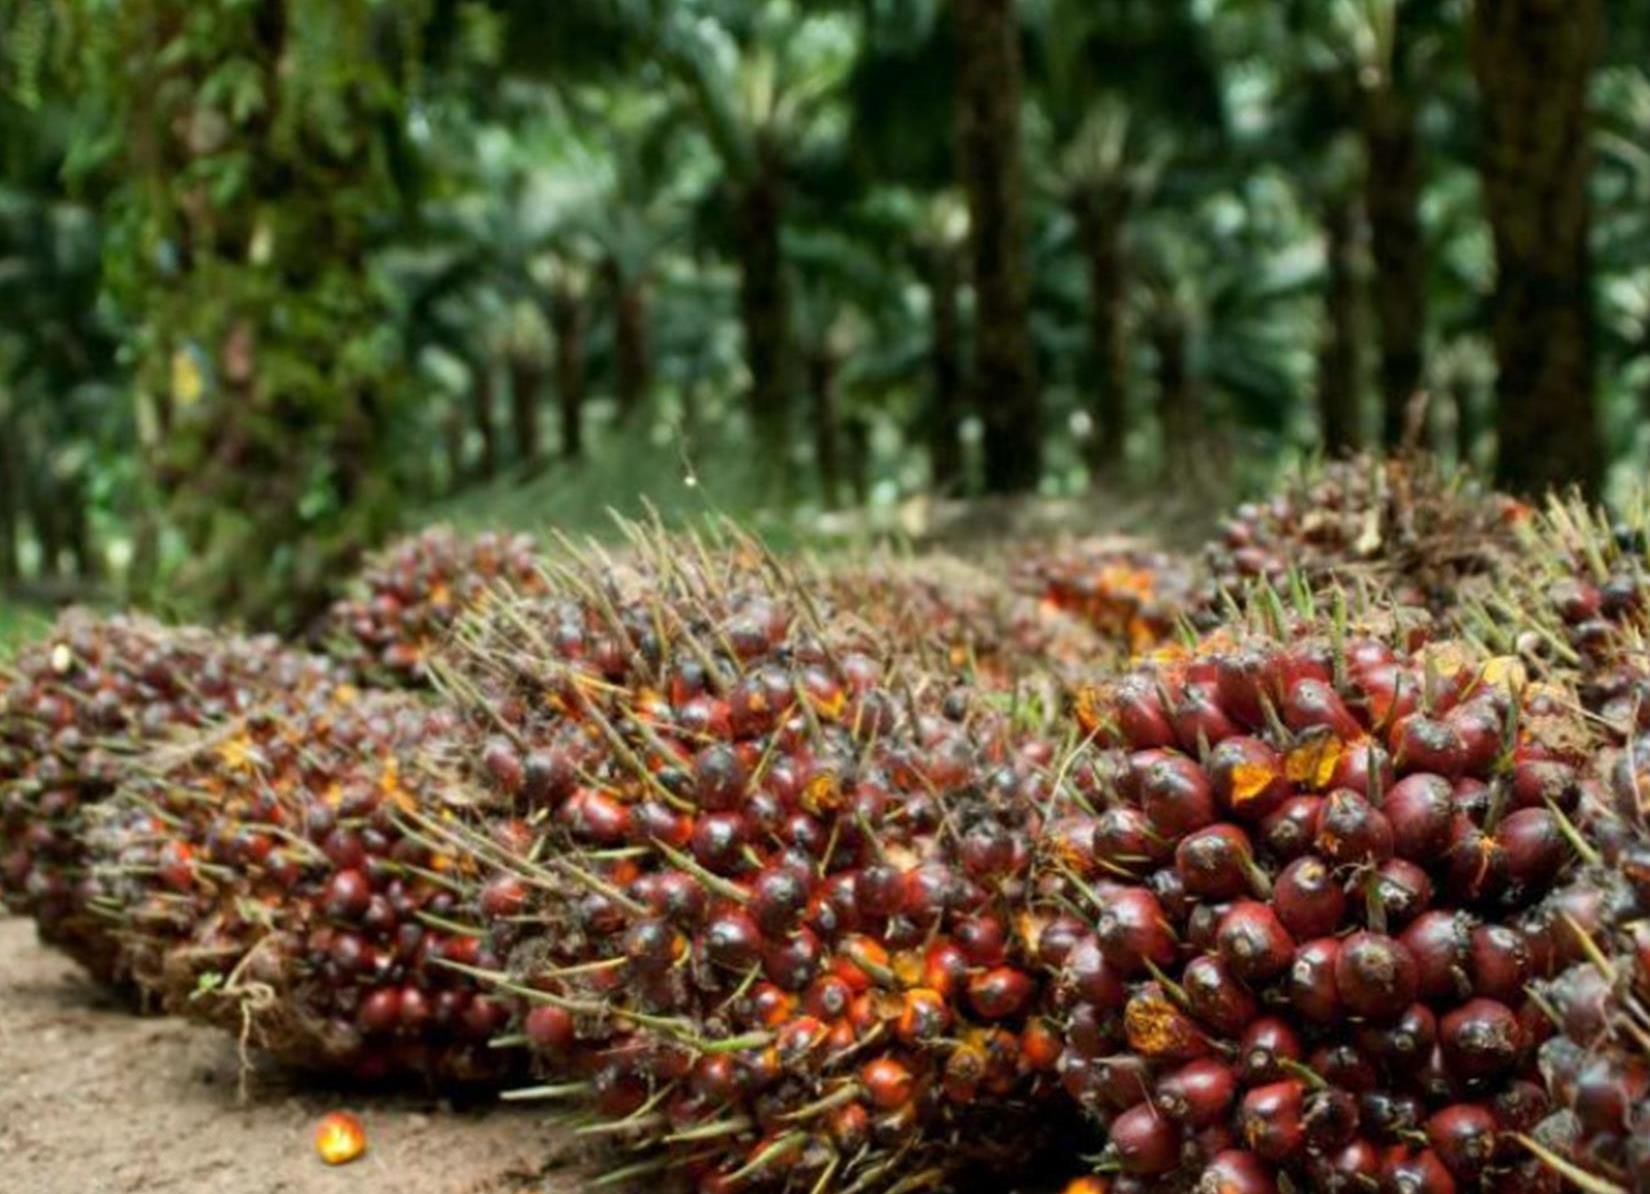 Harga Sawit di Sumatera Selatan Kembali Turun, Sekarang Jadi Segini